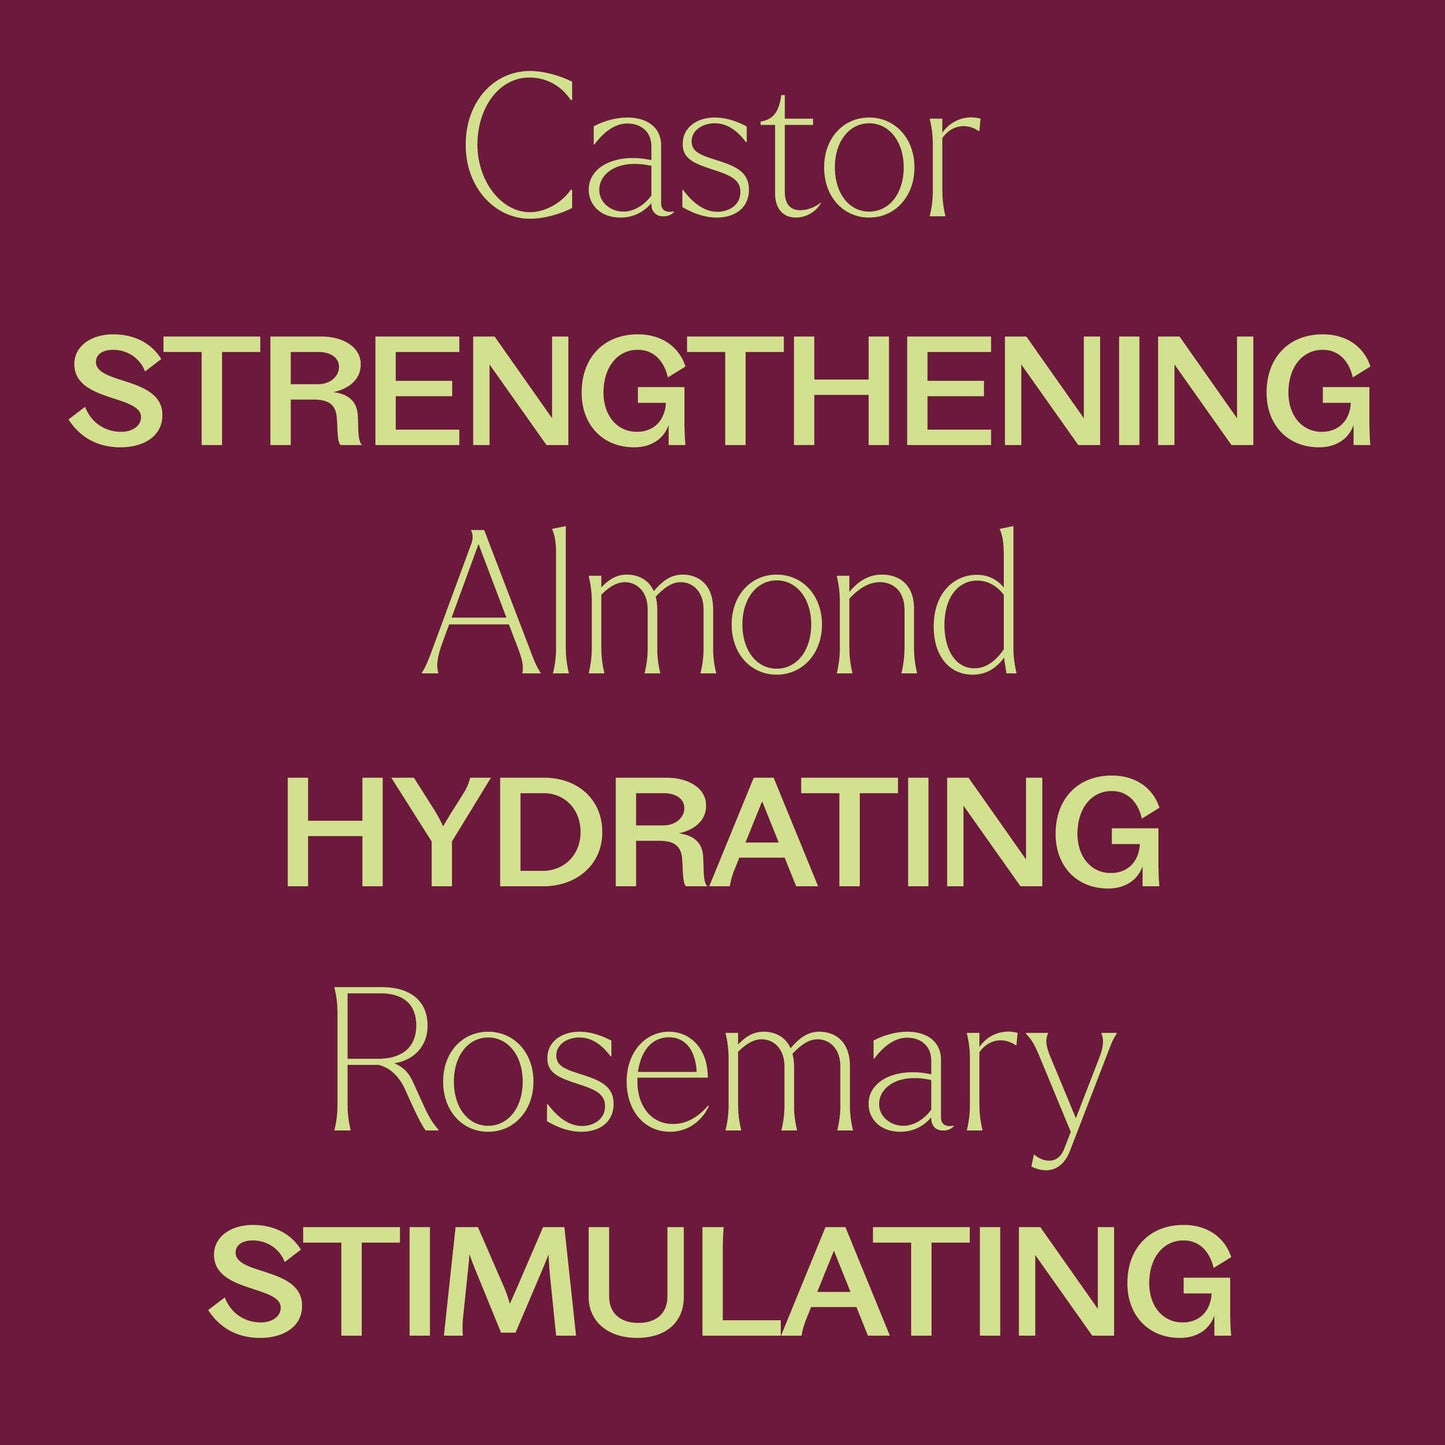 Rosemary & Castor Hair Oil is strengthening, hydrating, stimulating